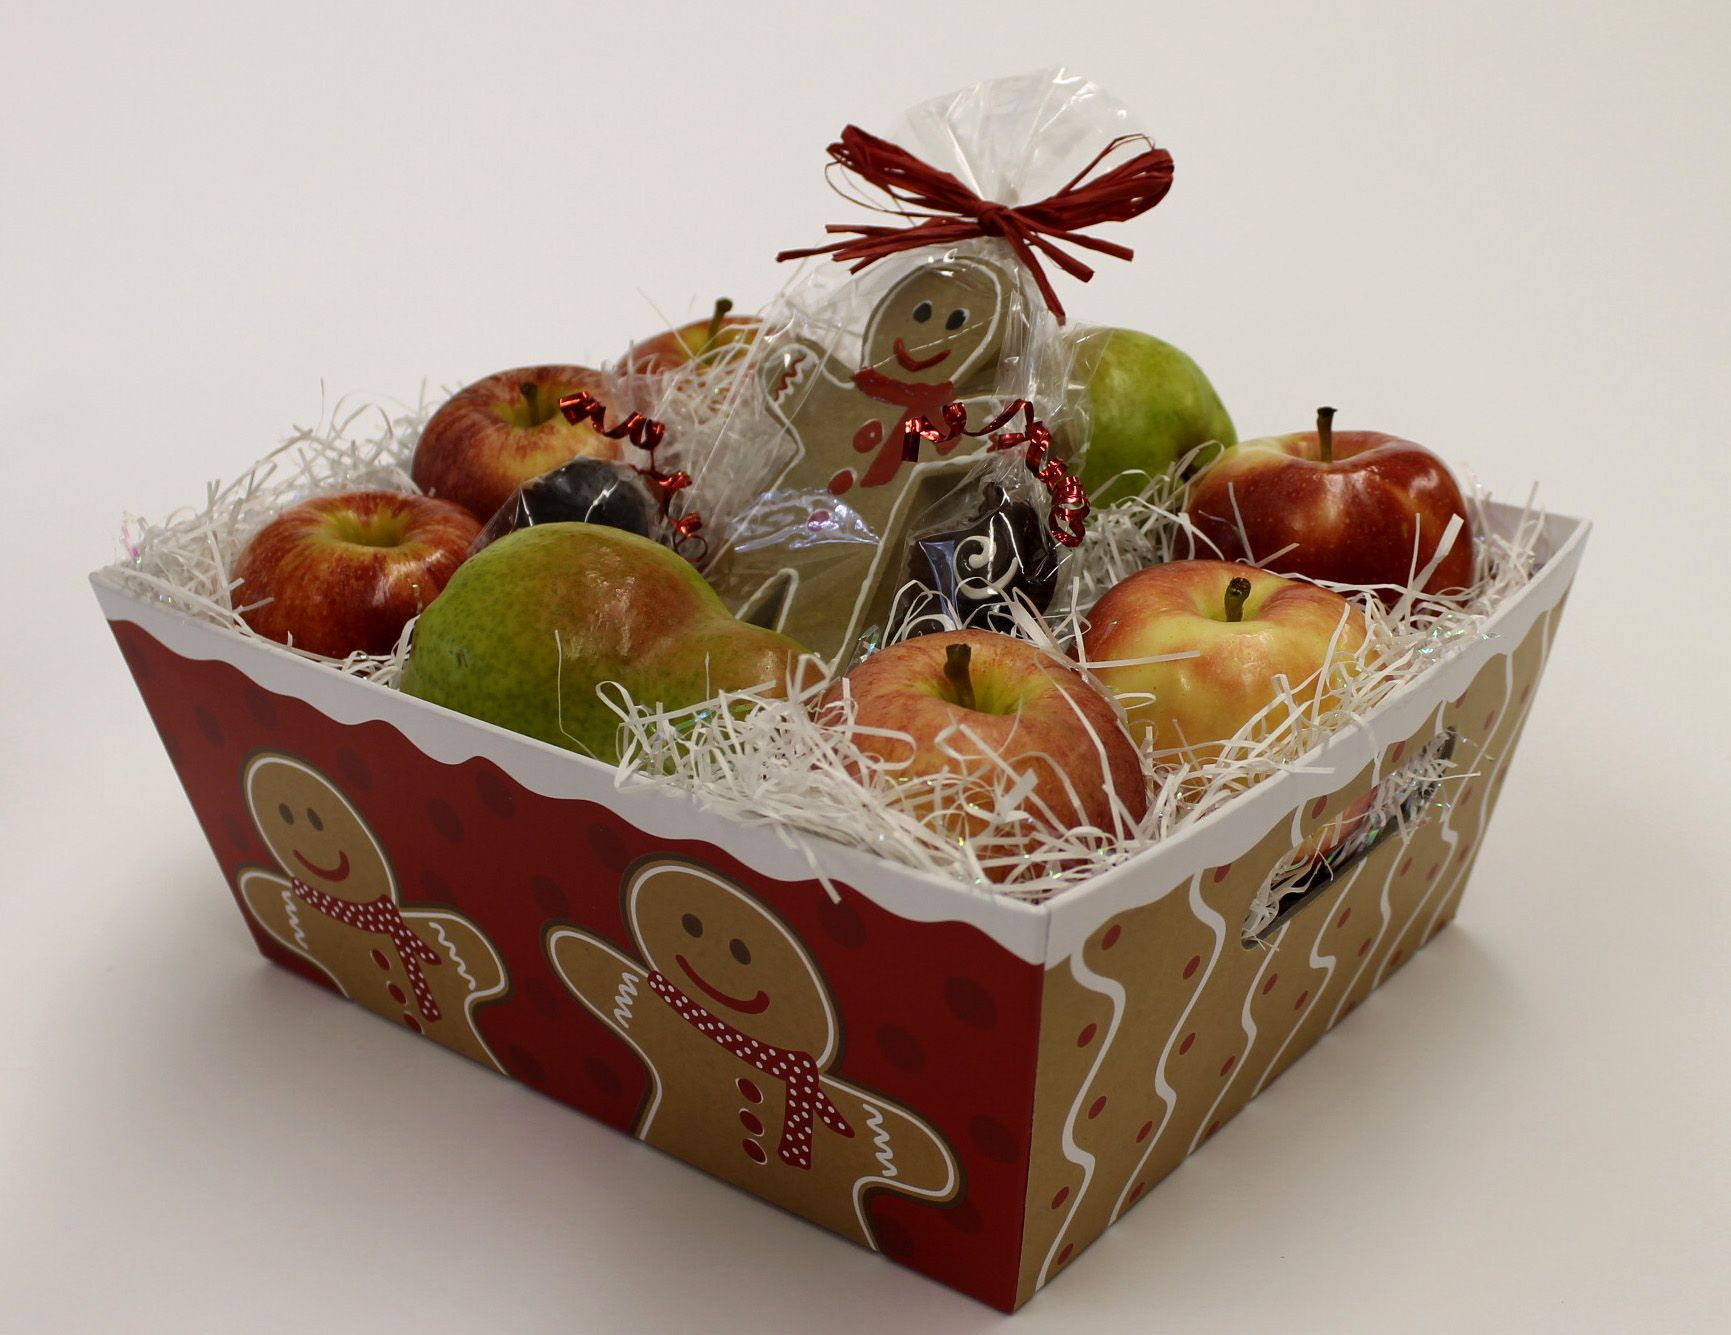 Homemade Fruit Basket Gift Ideas
 fruit basket idea